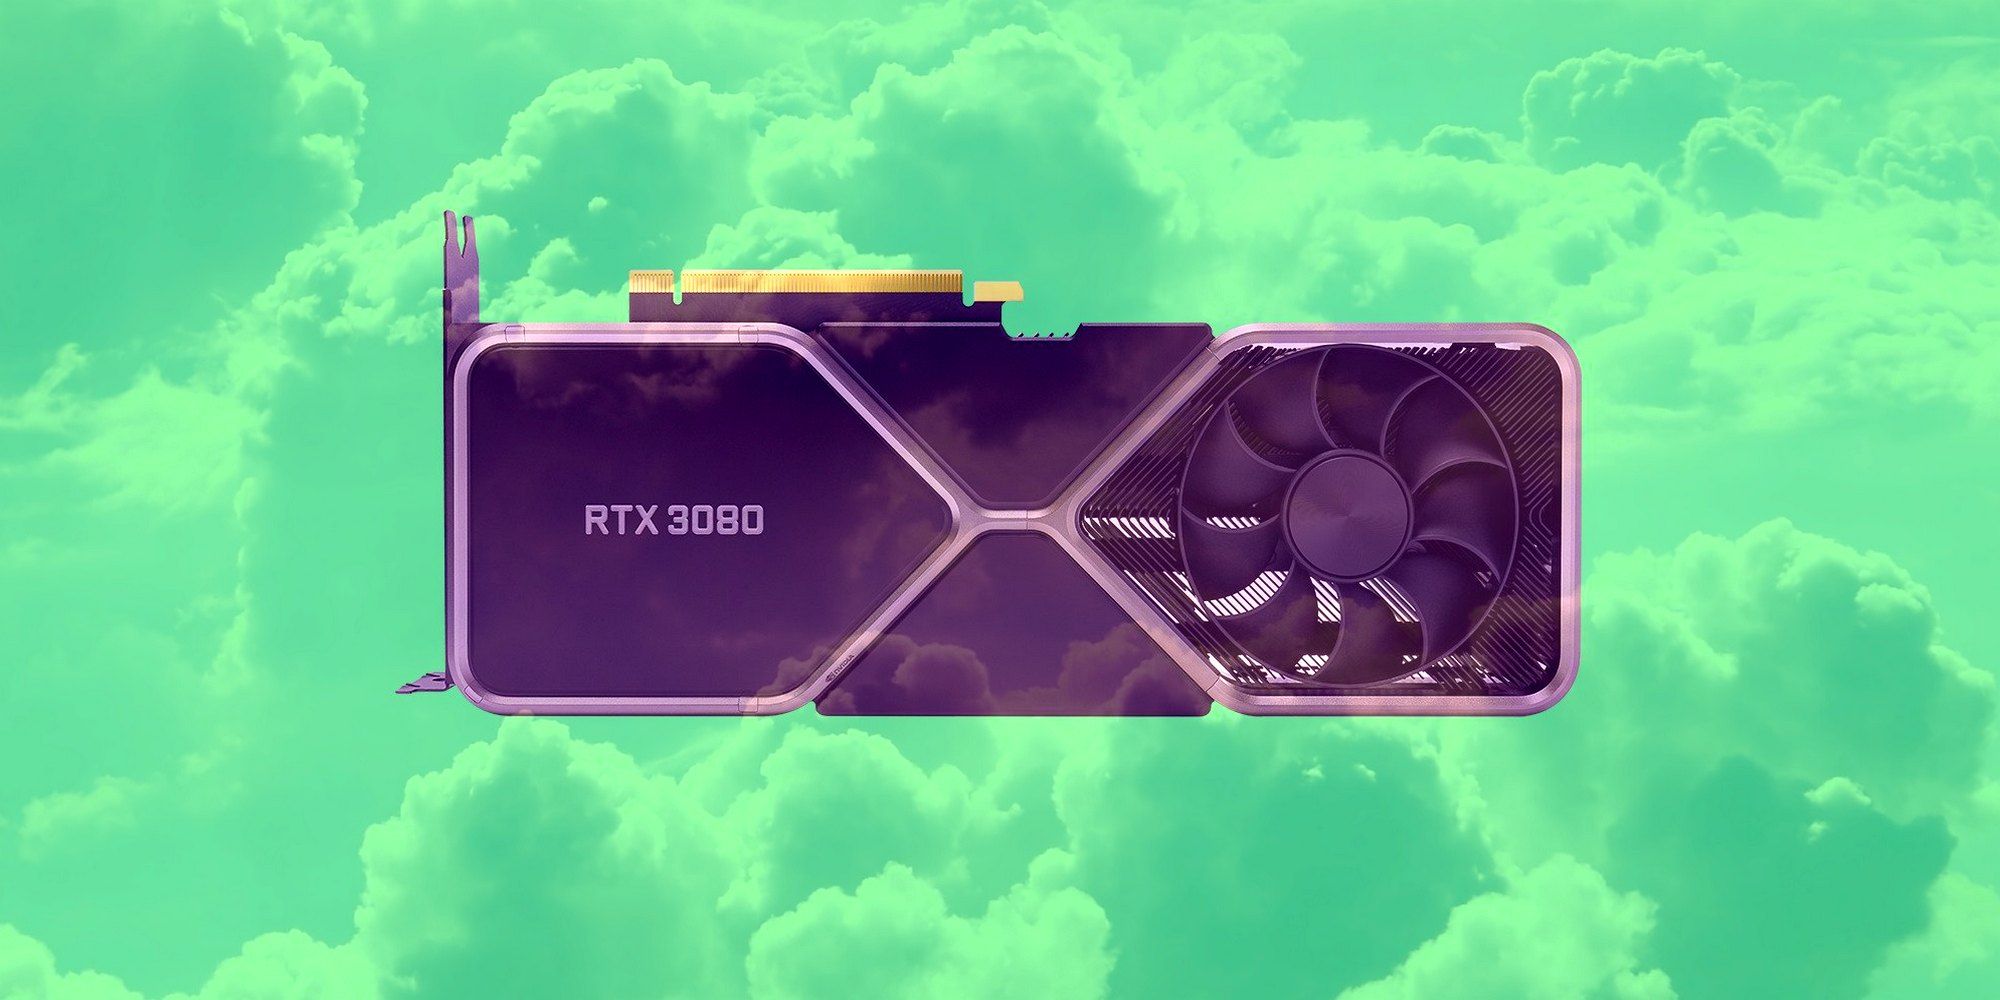 You Can Finally Score An RTX 3080 GPU In The Cloud